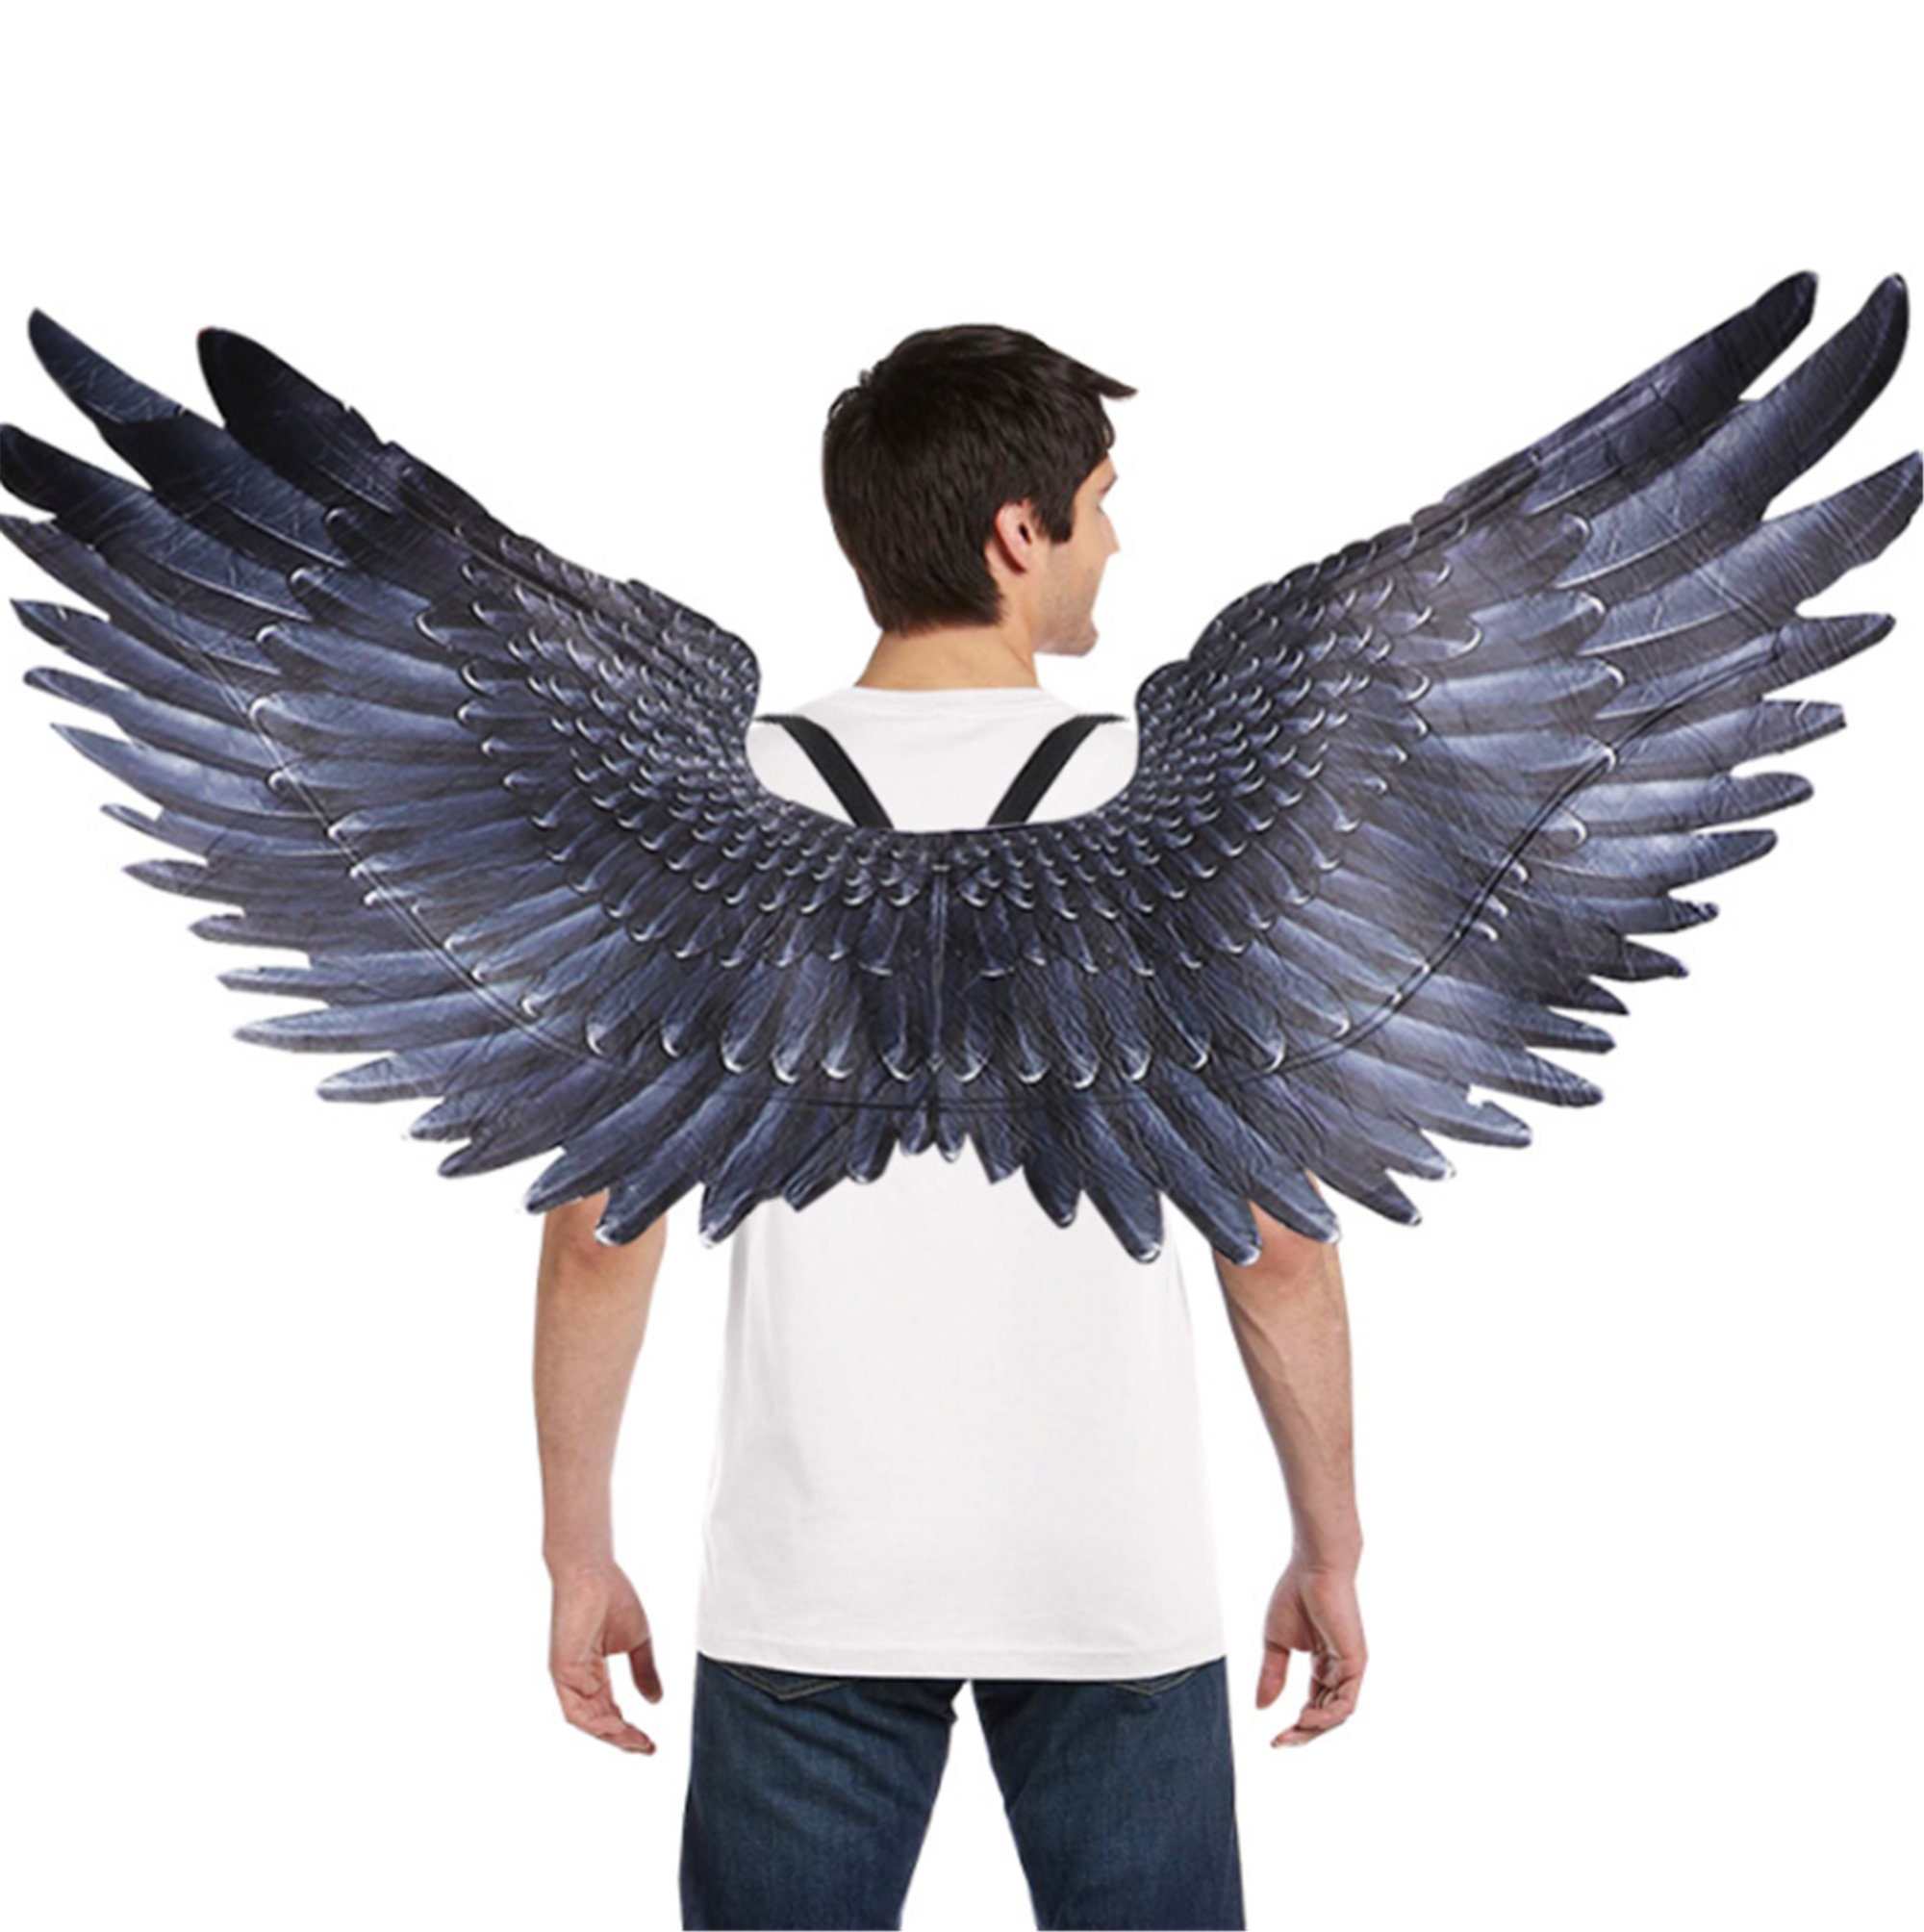 Costume Wings Adult Gift Pride Fun -